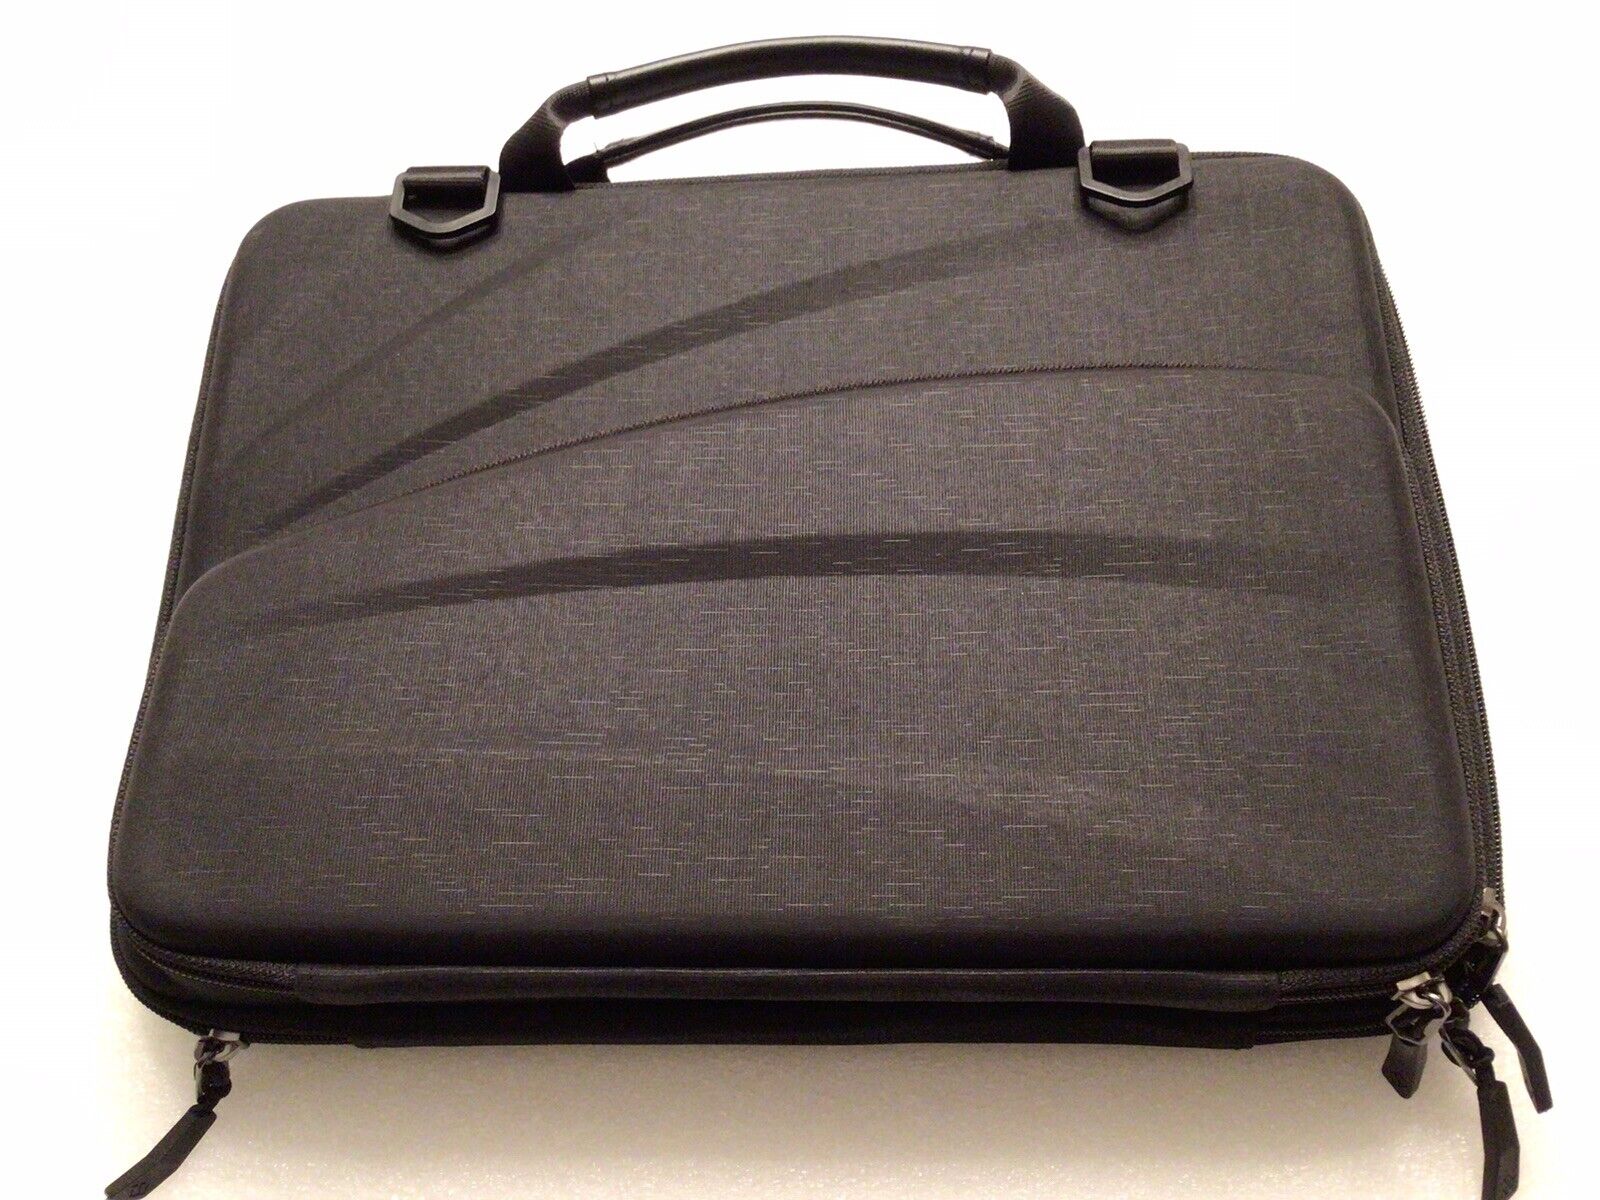 FINPAC 13-14 Inch Laptop Sleeve Case Briefcase Shoulder Bag with Black